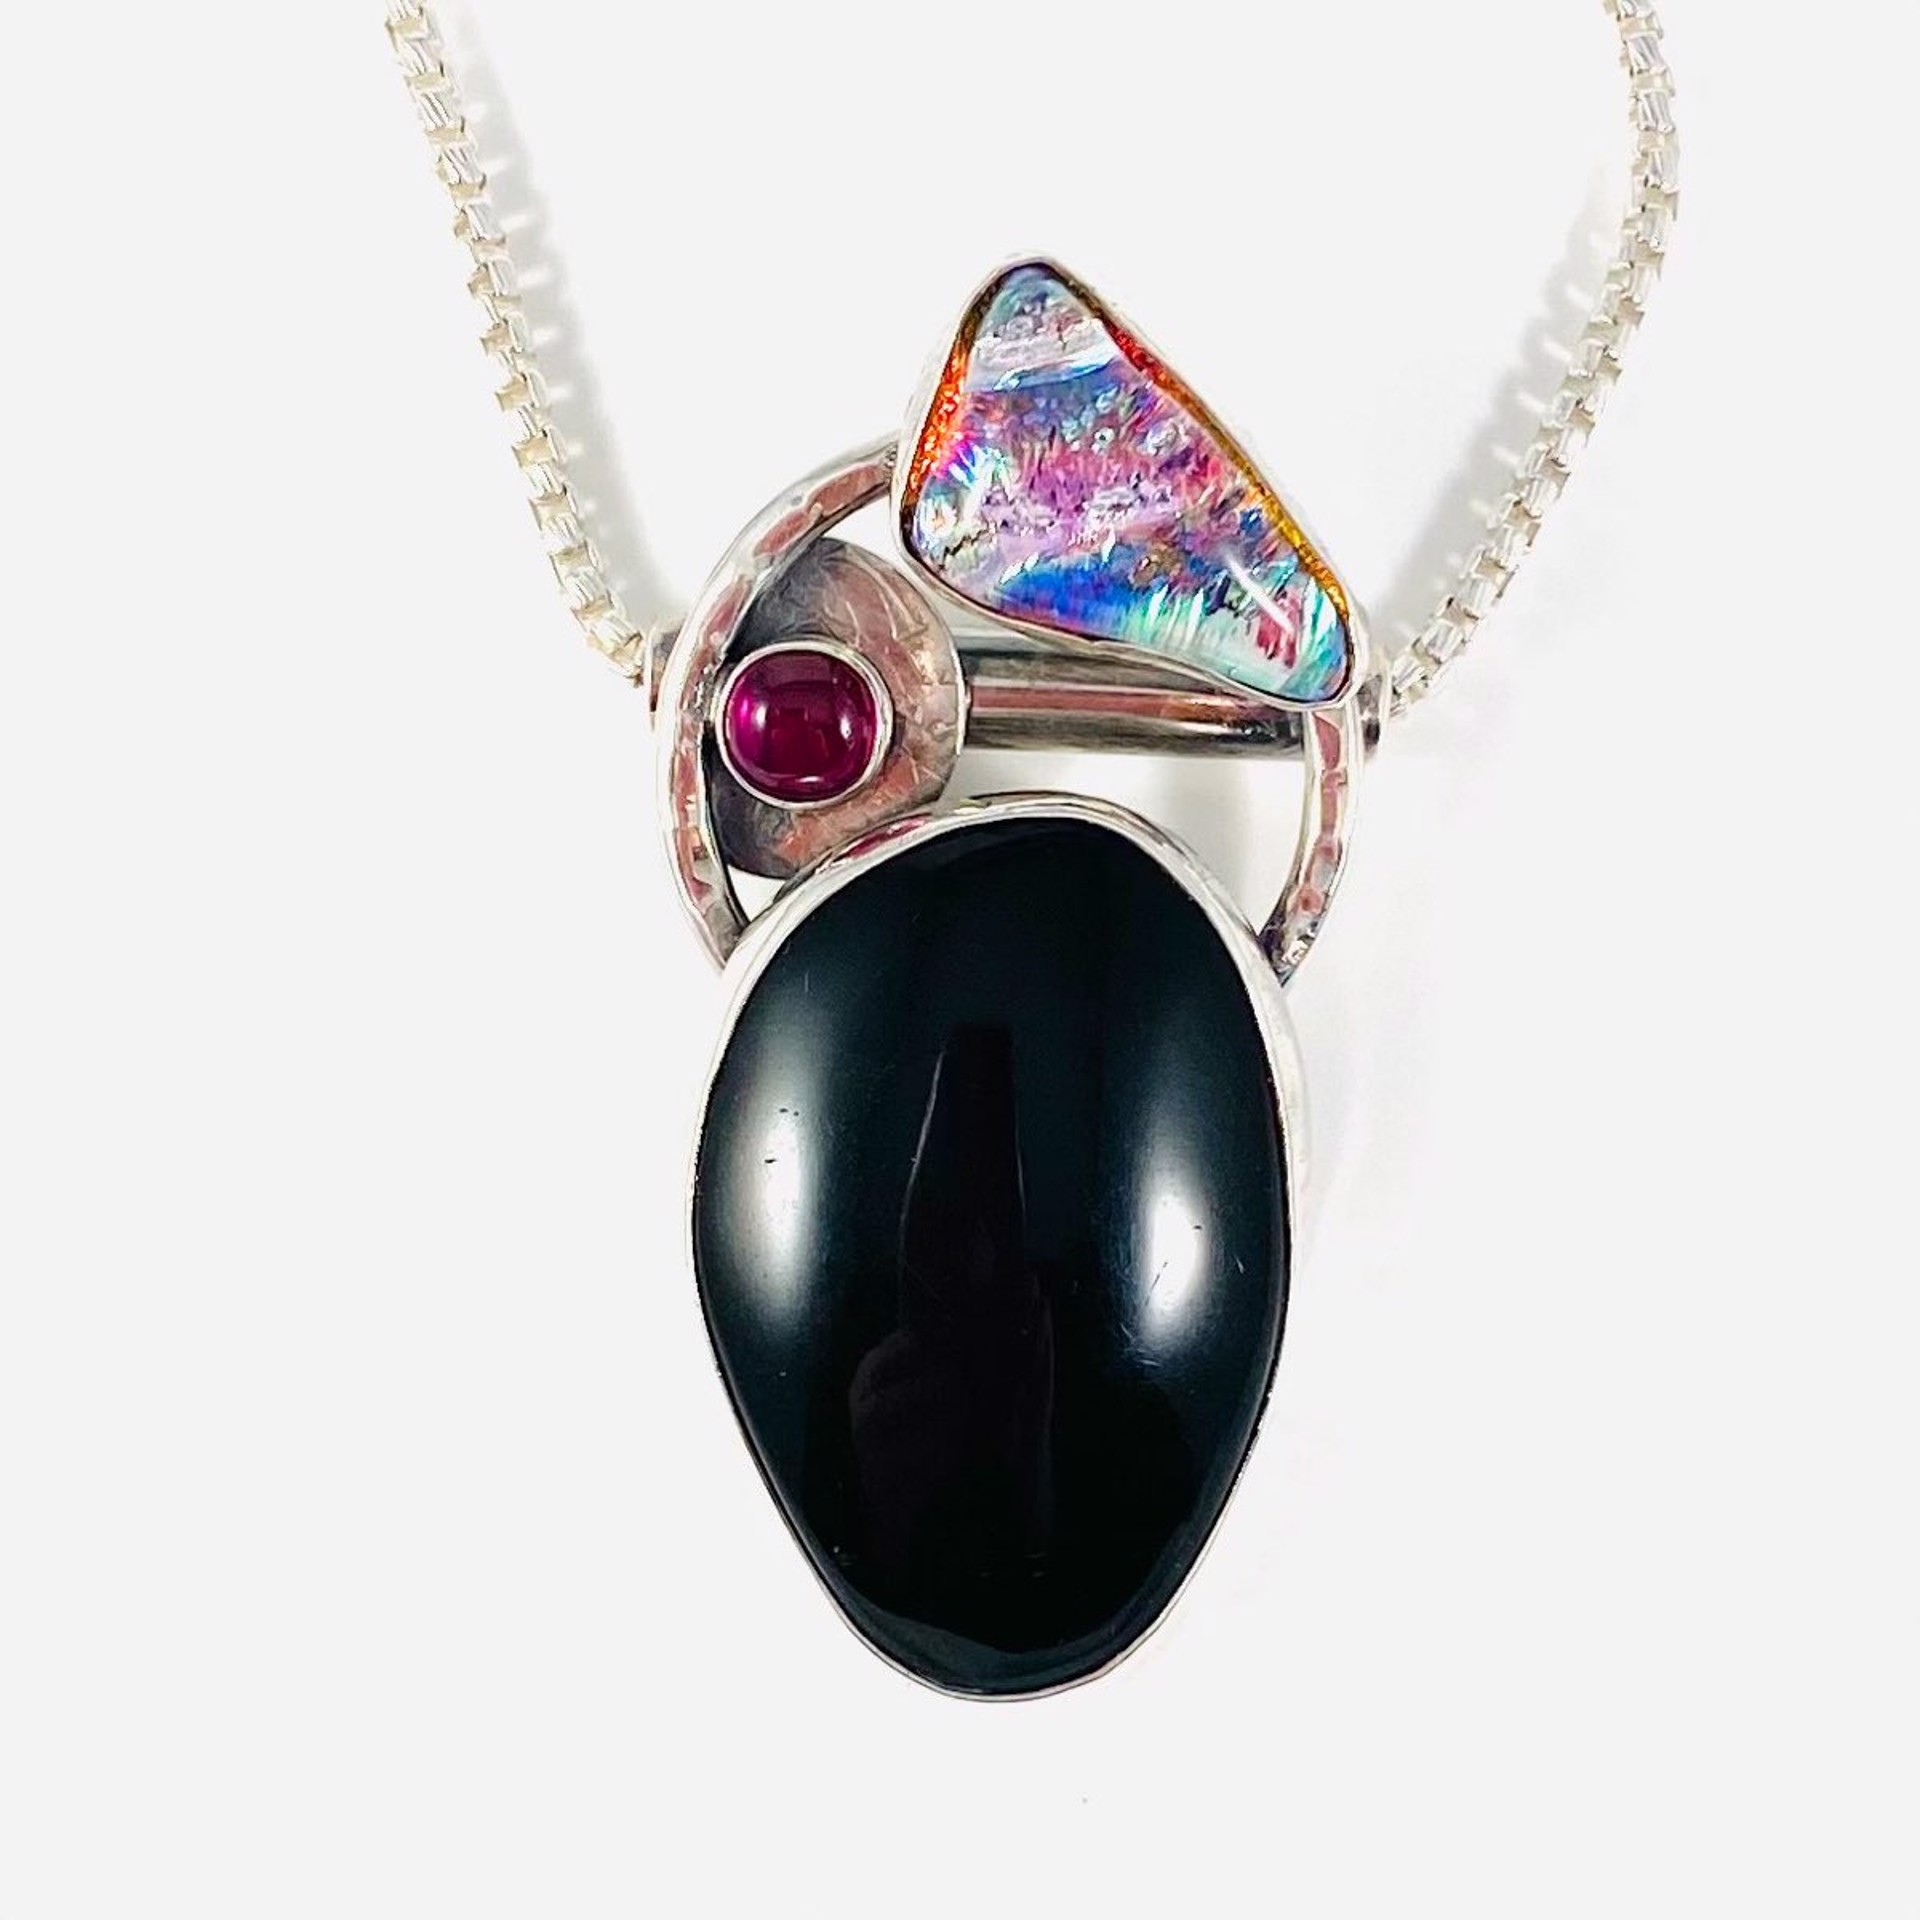 Black Pyrite, Dichroic Glass, Ruby CZ Pendant on 18”ss box chain AB22-18 by Anne Bivens